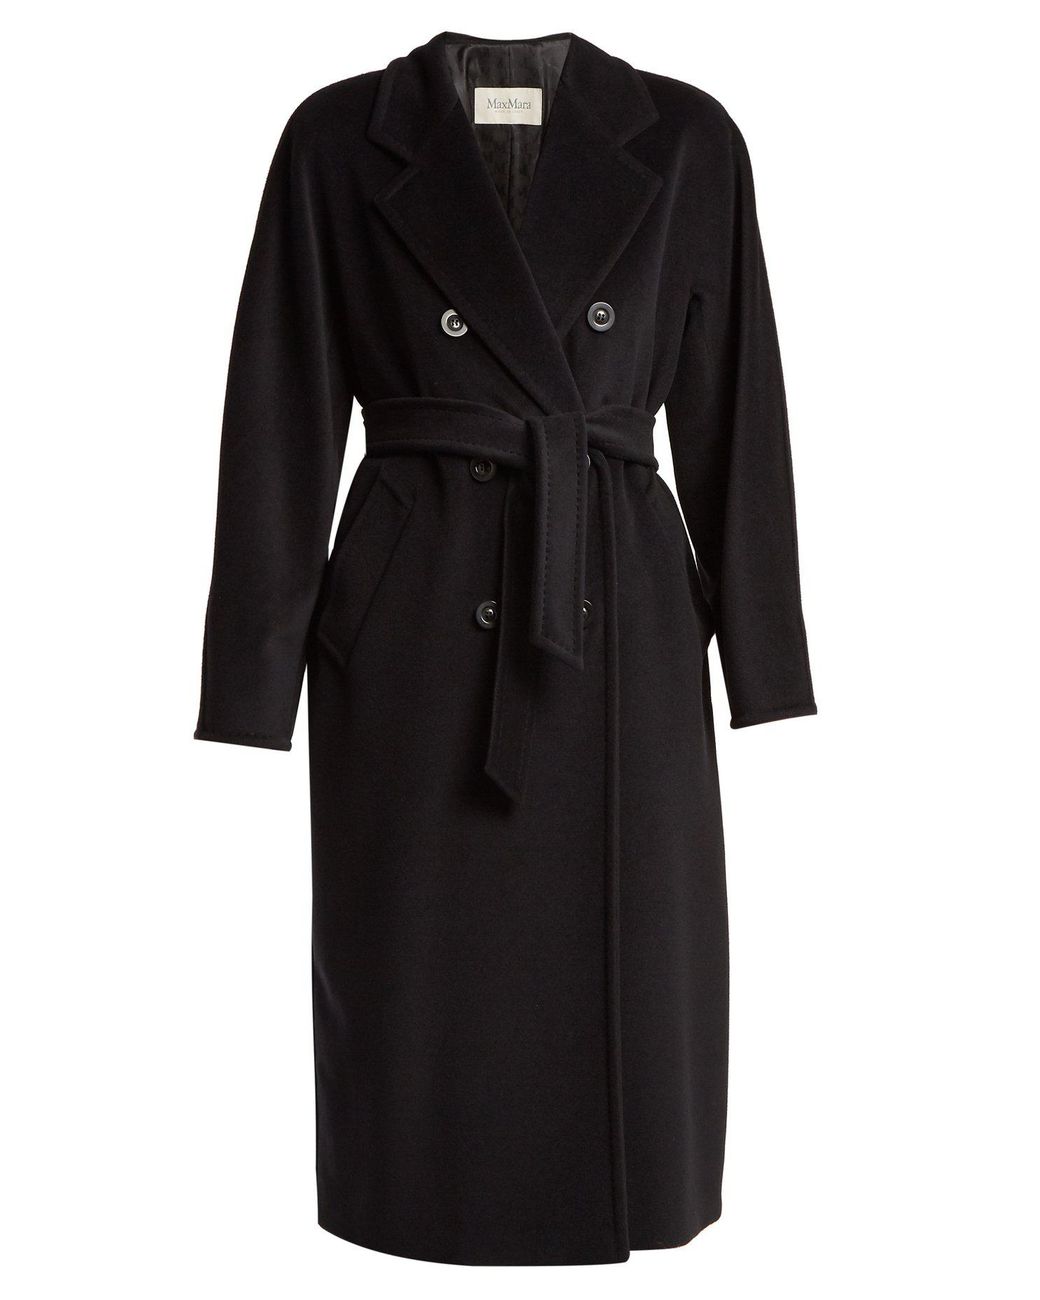 Max Mara Madame Coat in Black | Lyst